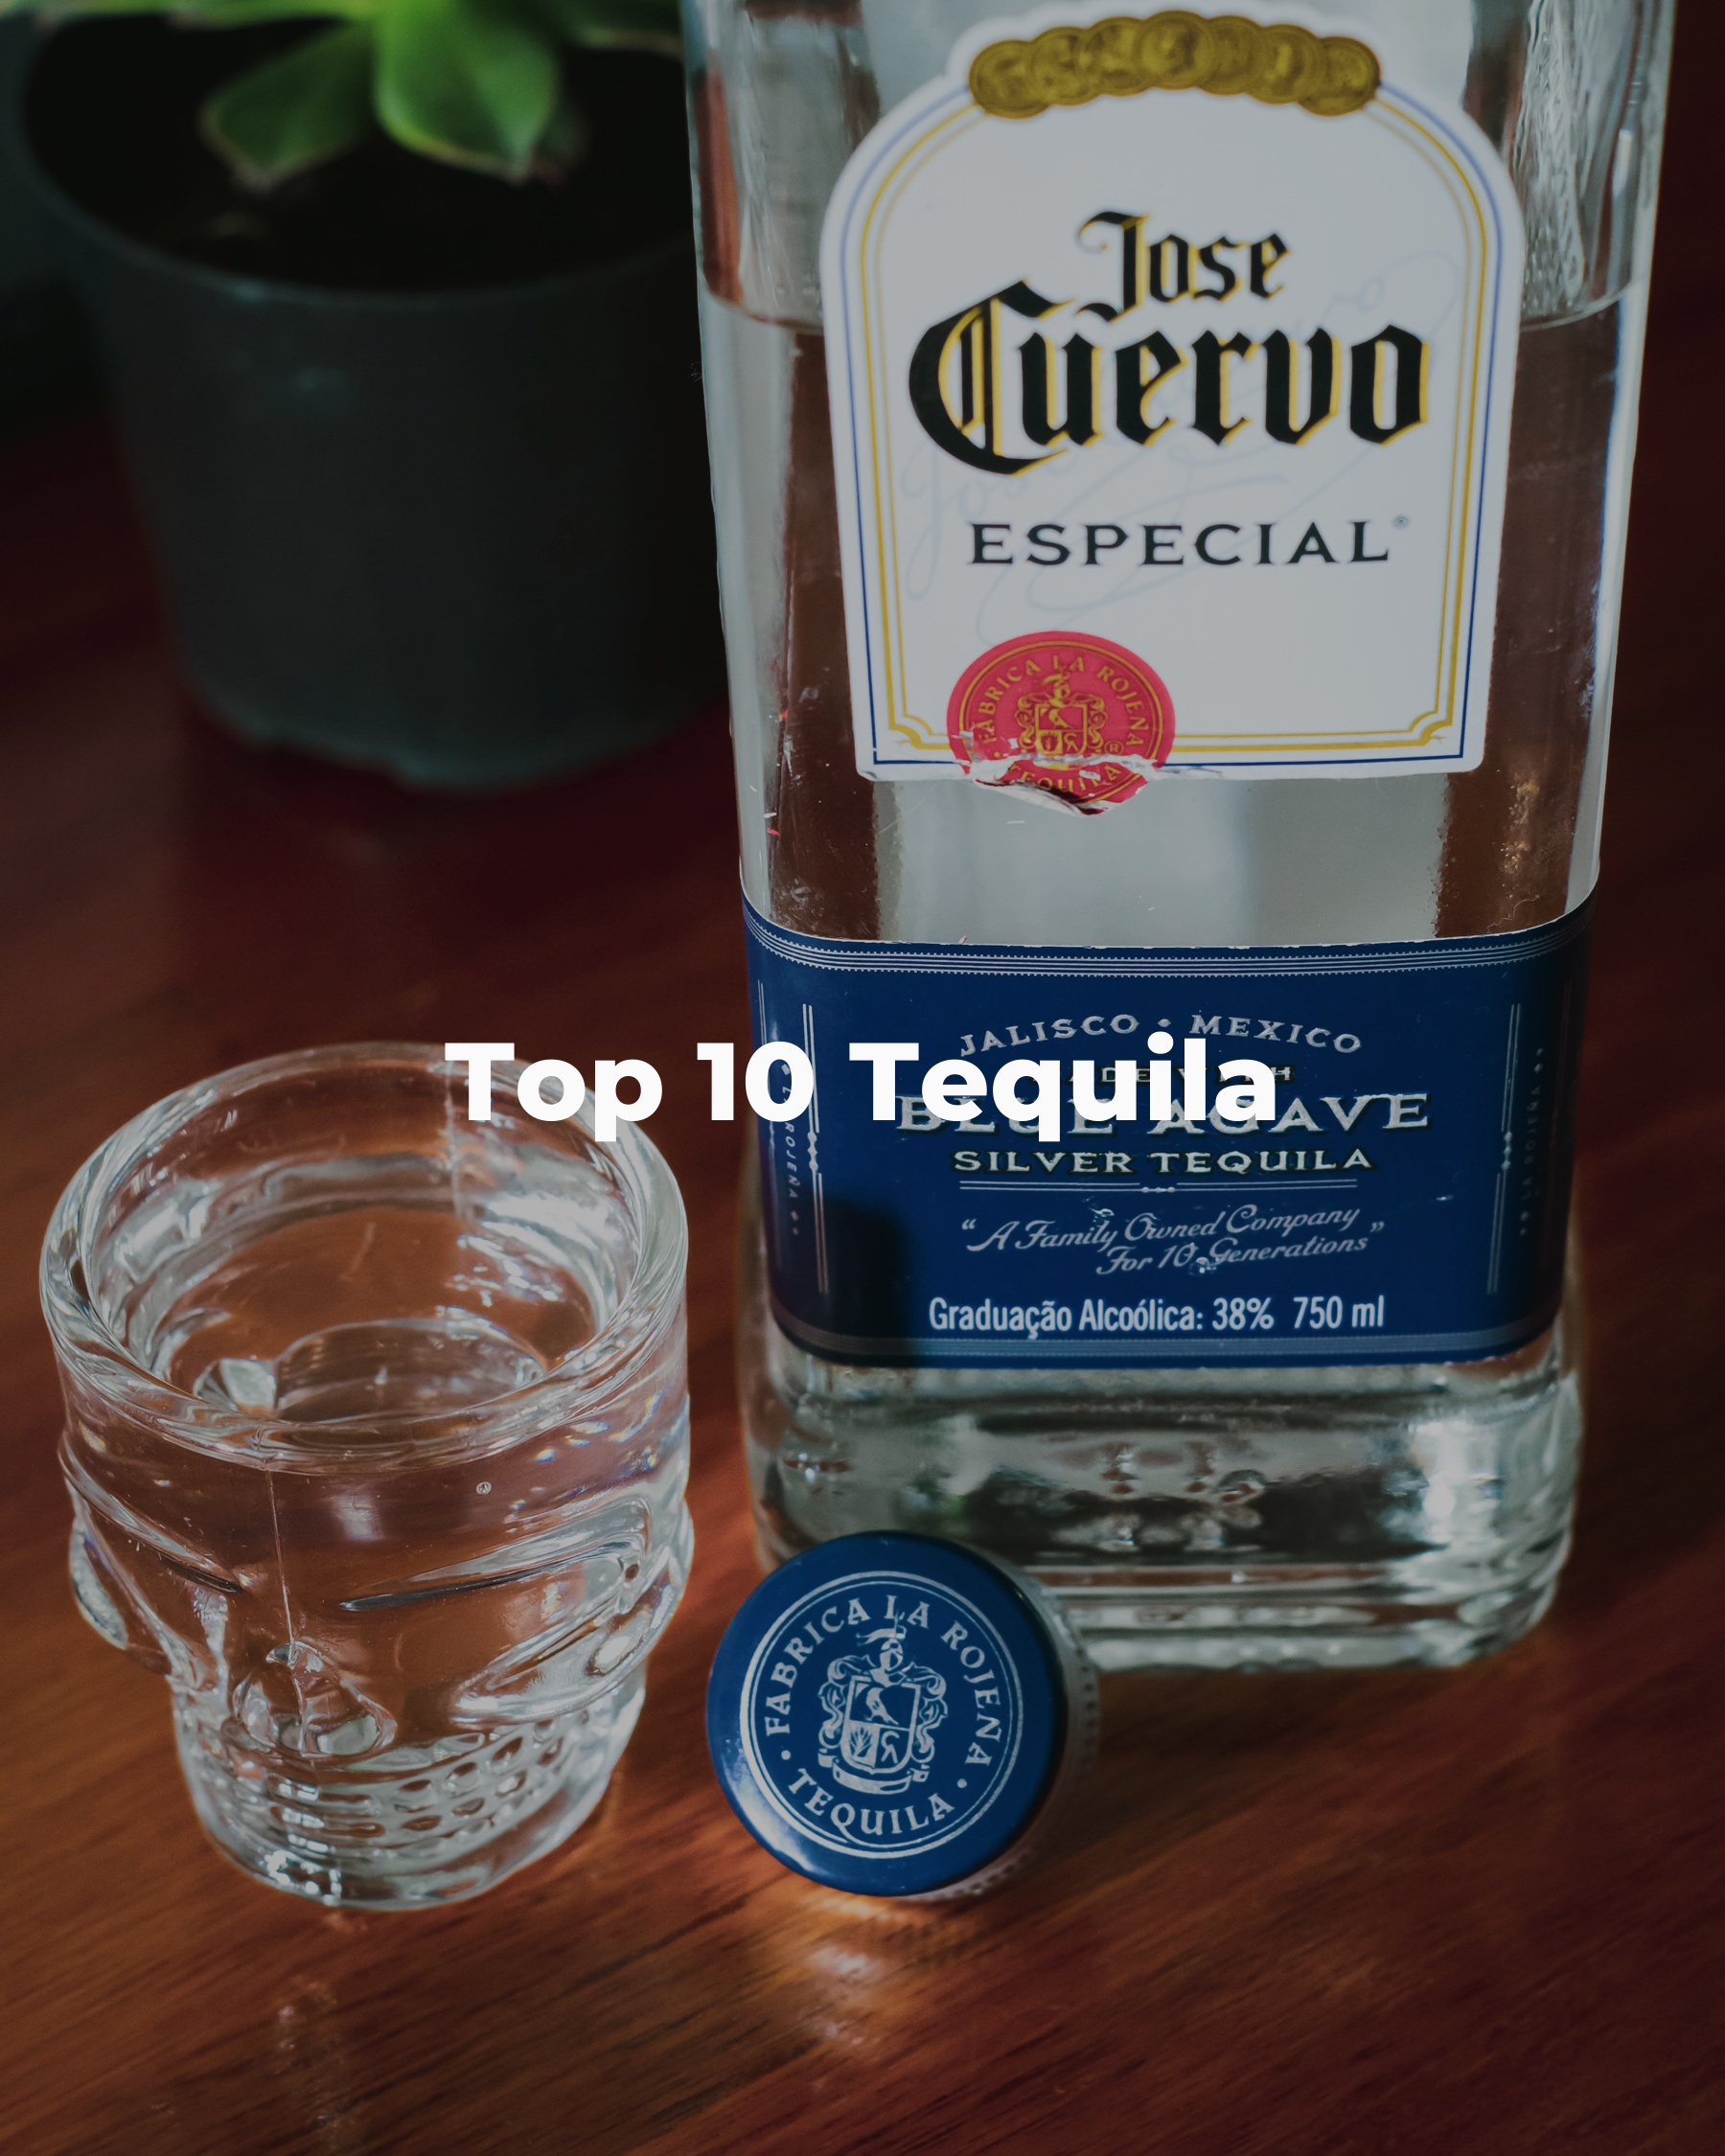 Top 10 Tequila